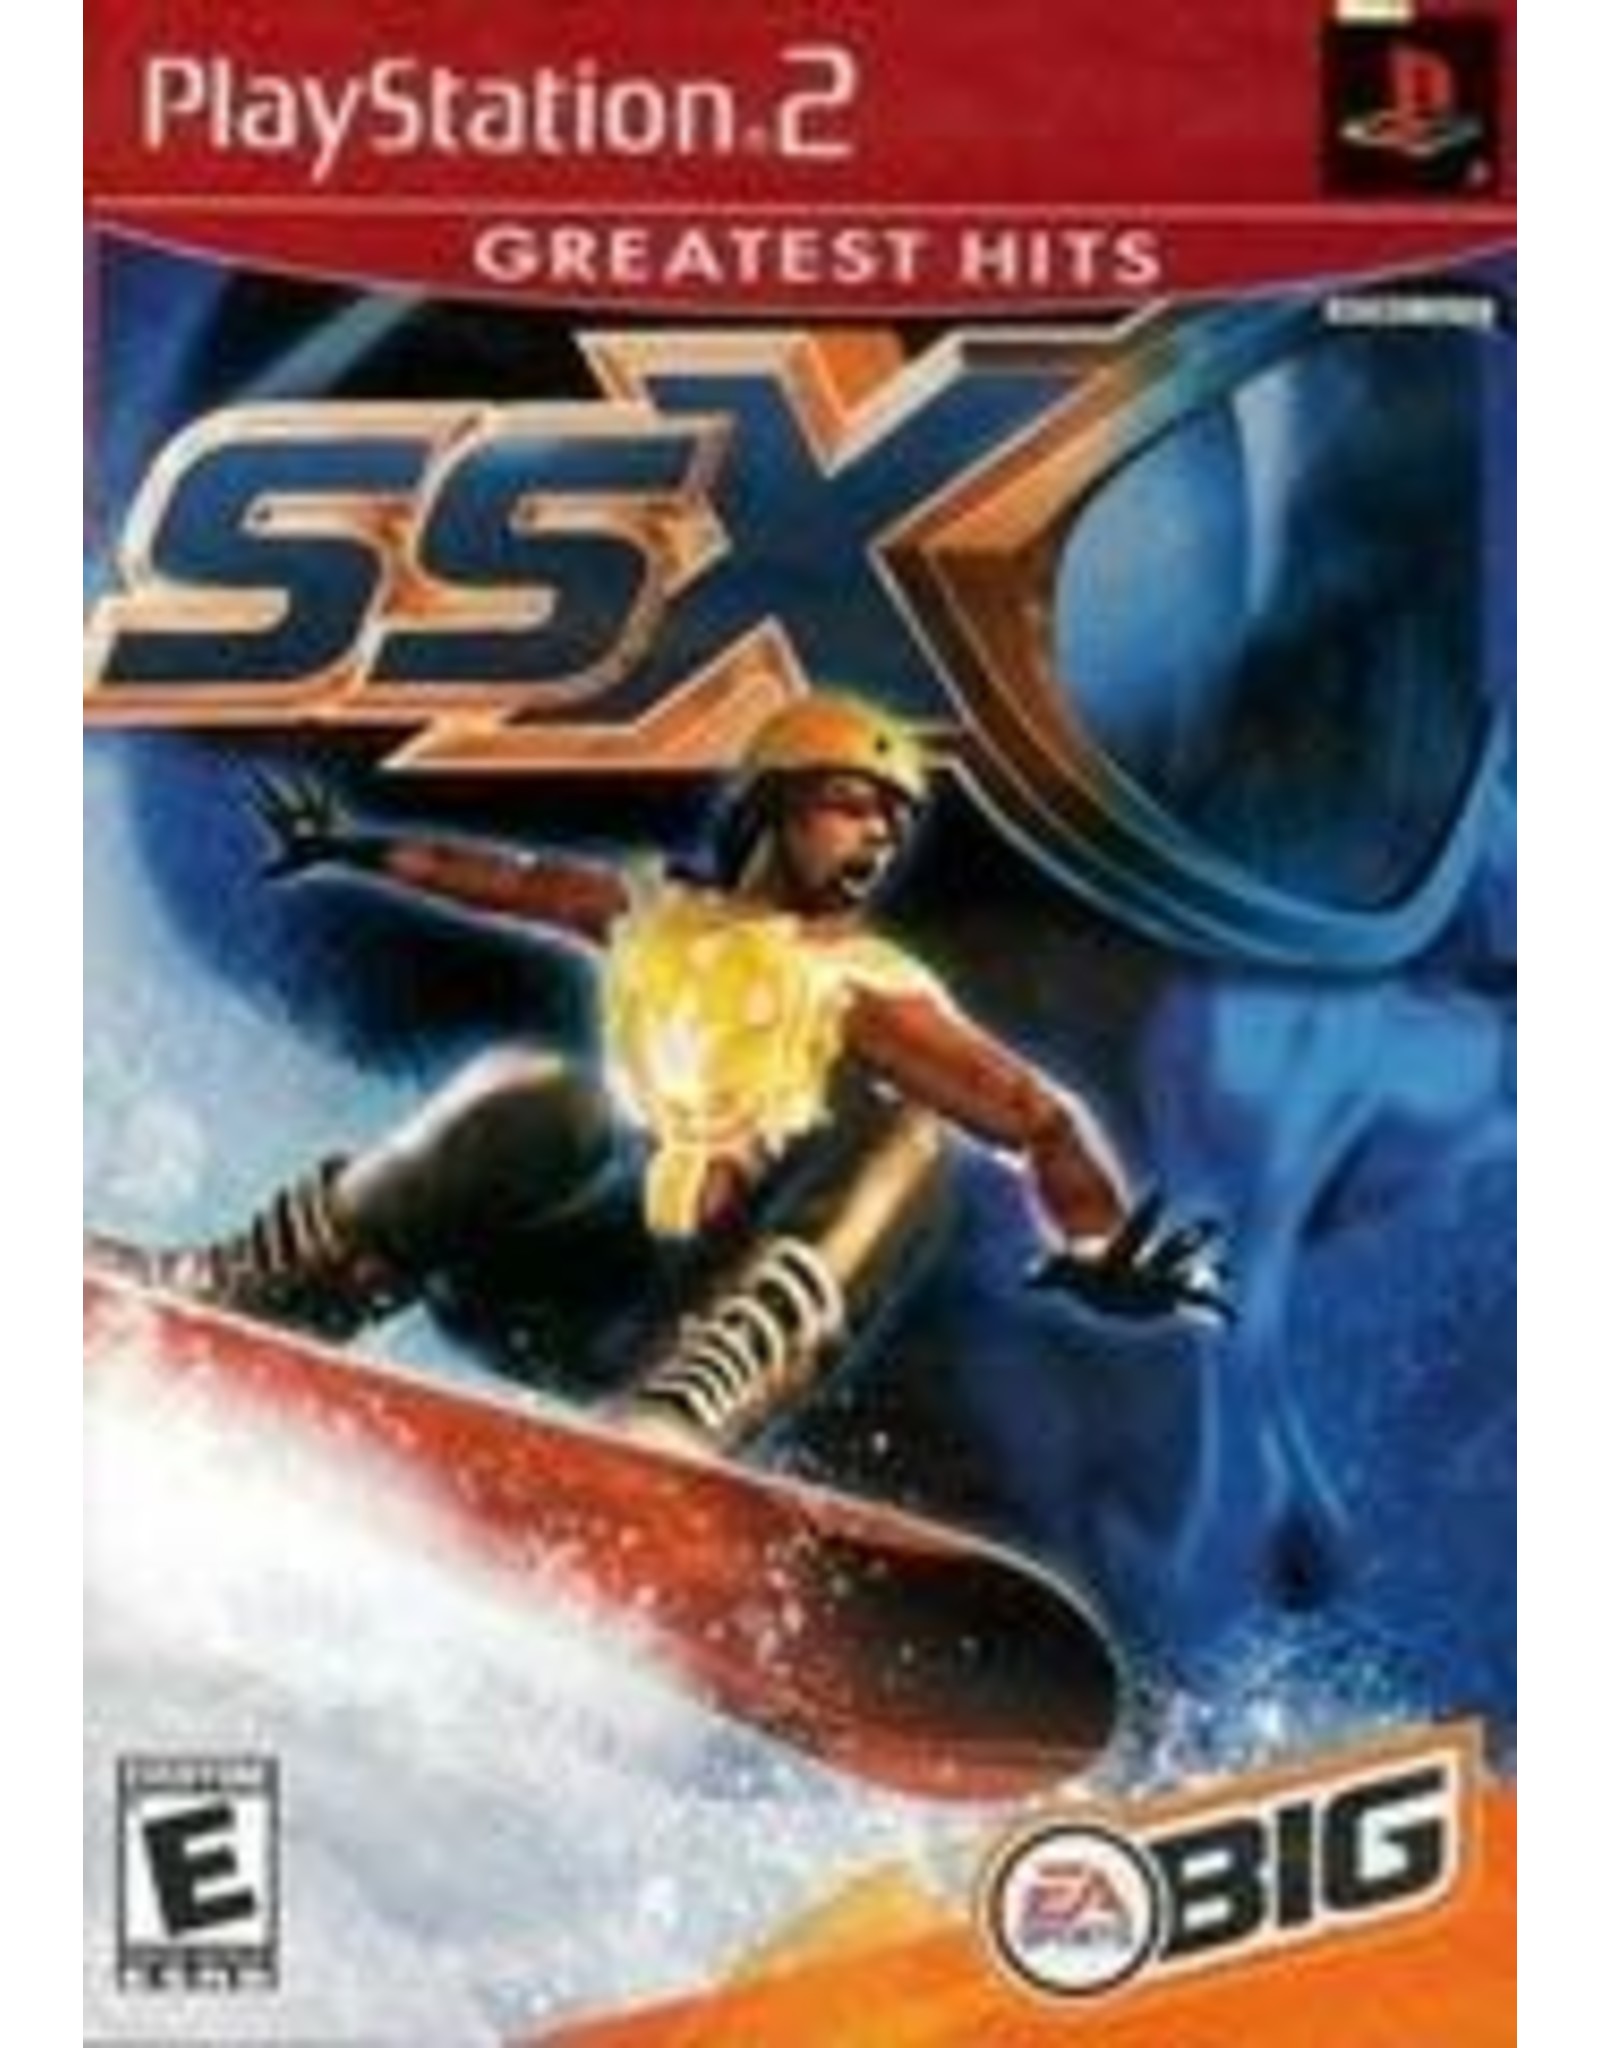 Playstation 2 SSX (Greatest Hits, CiB)